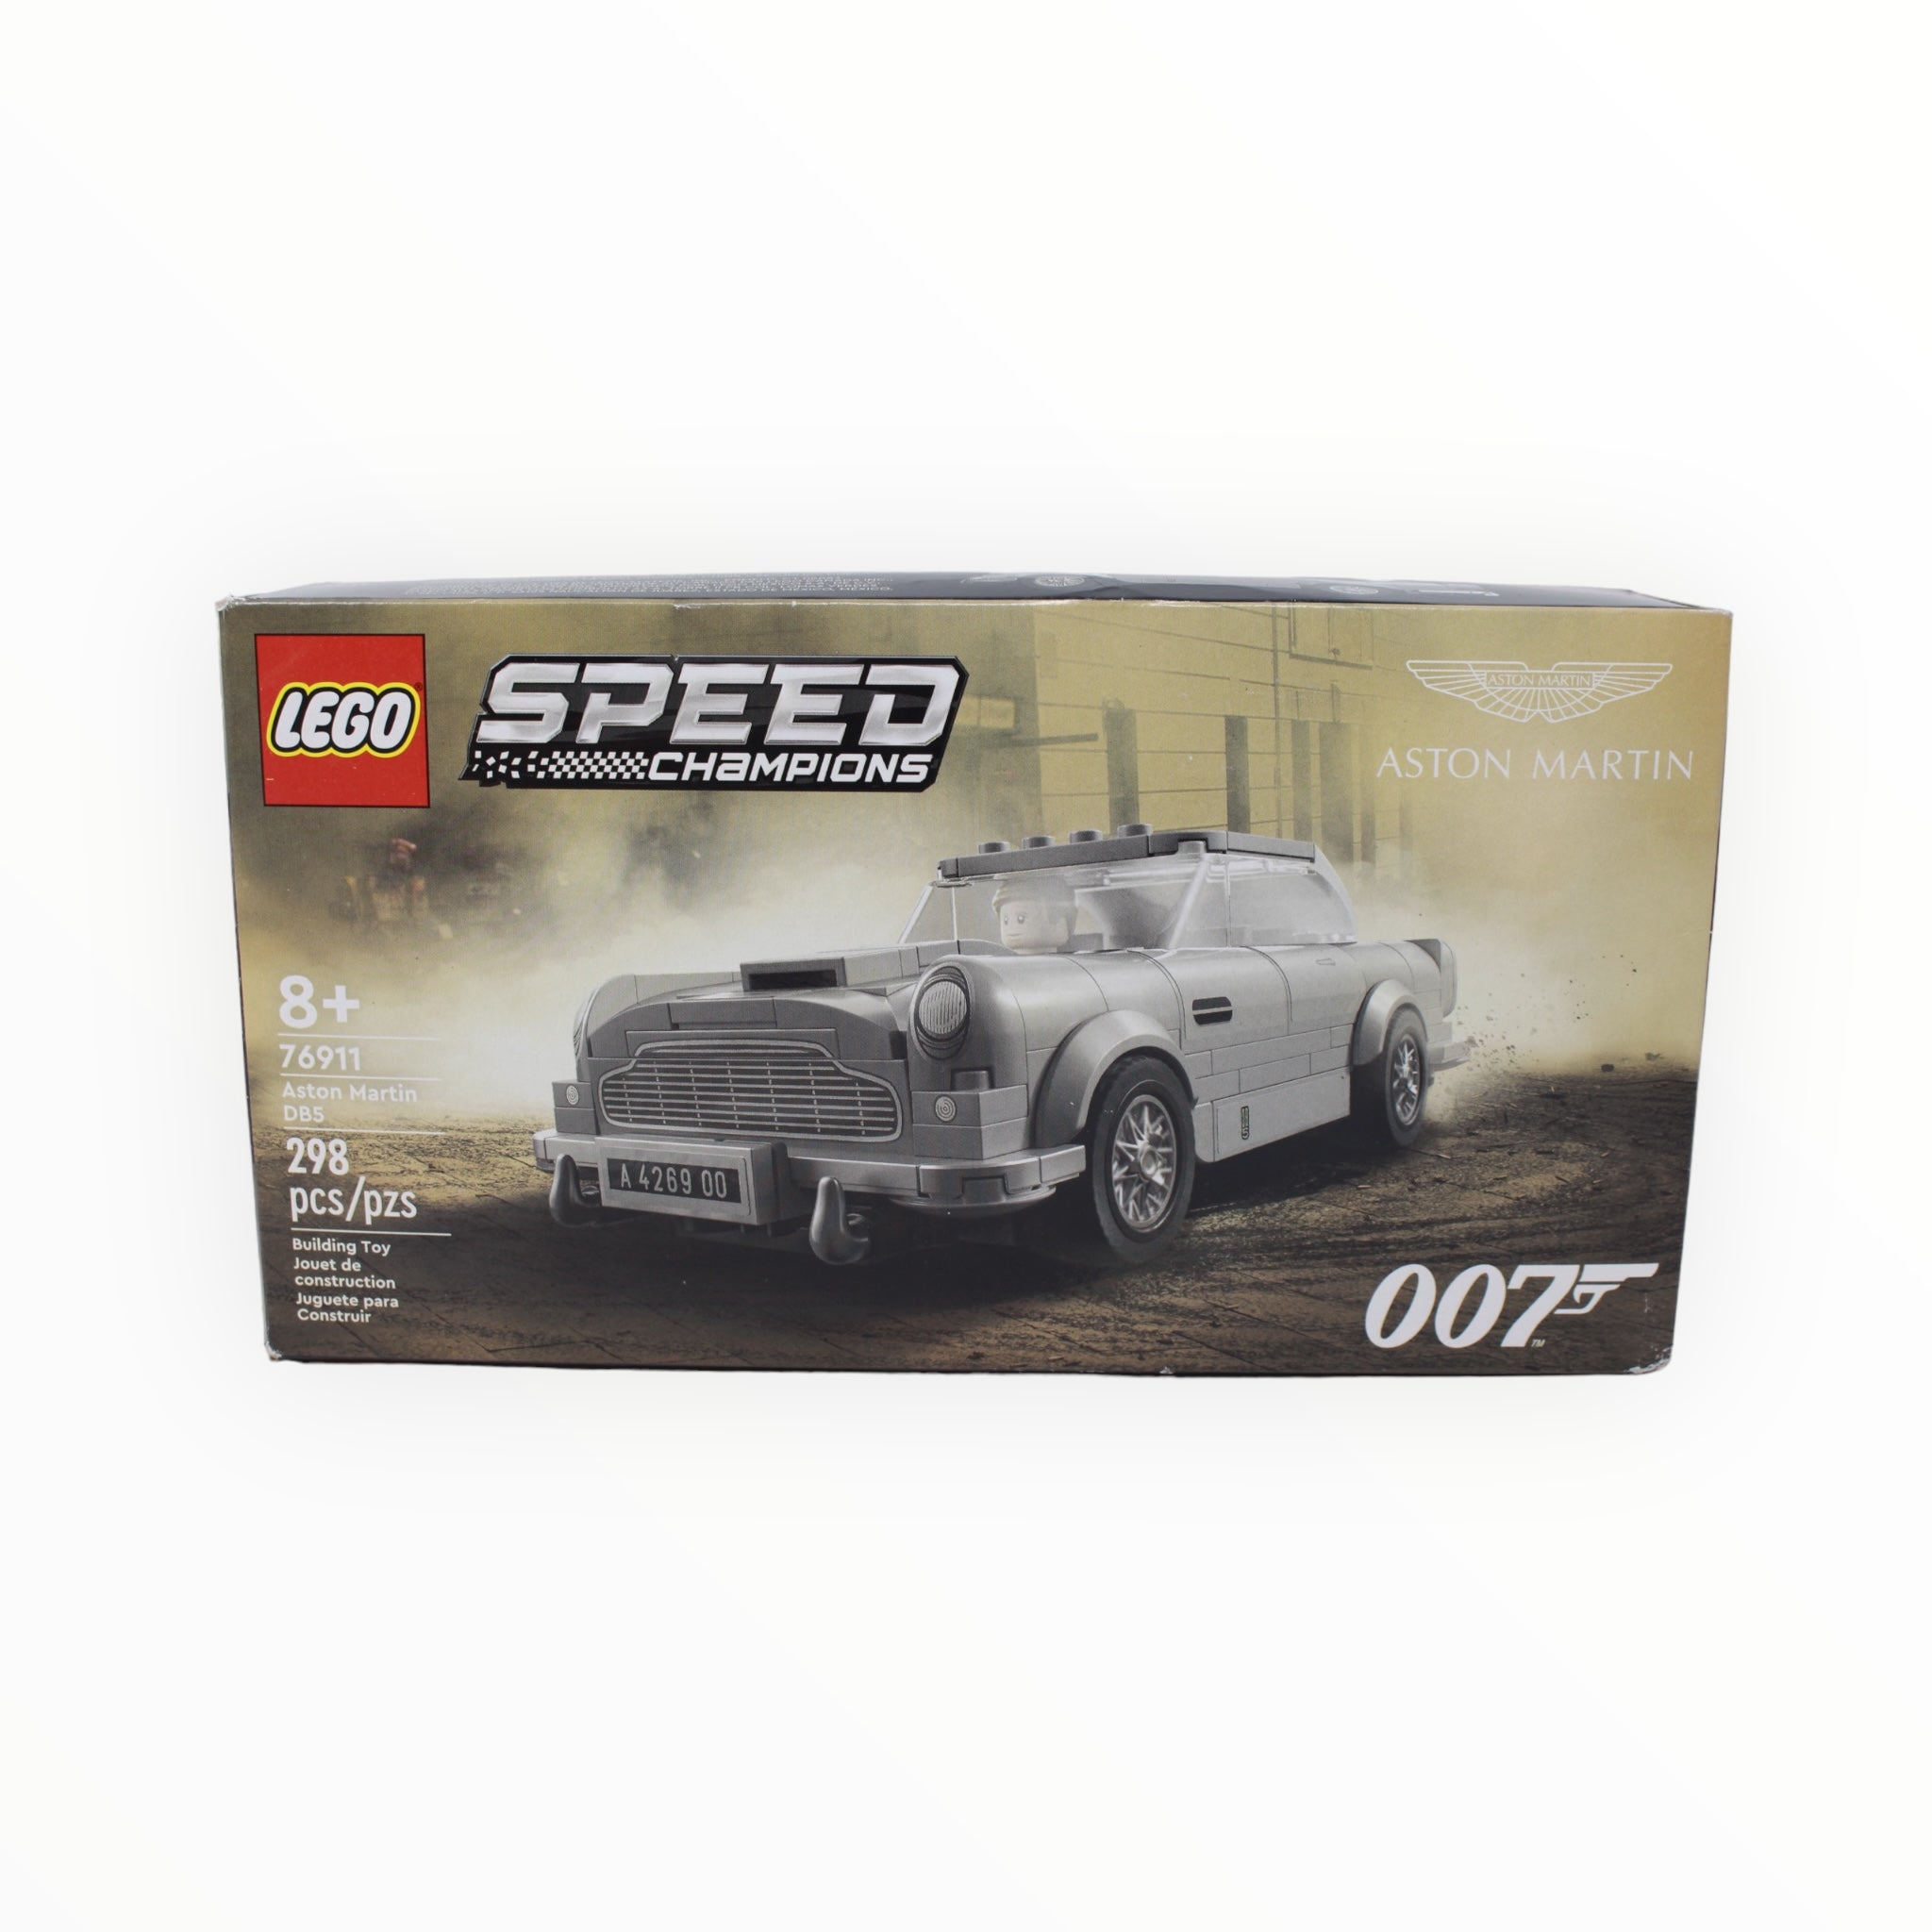 Used Set 76911 Speed Champions 007 Aston Martin DB5